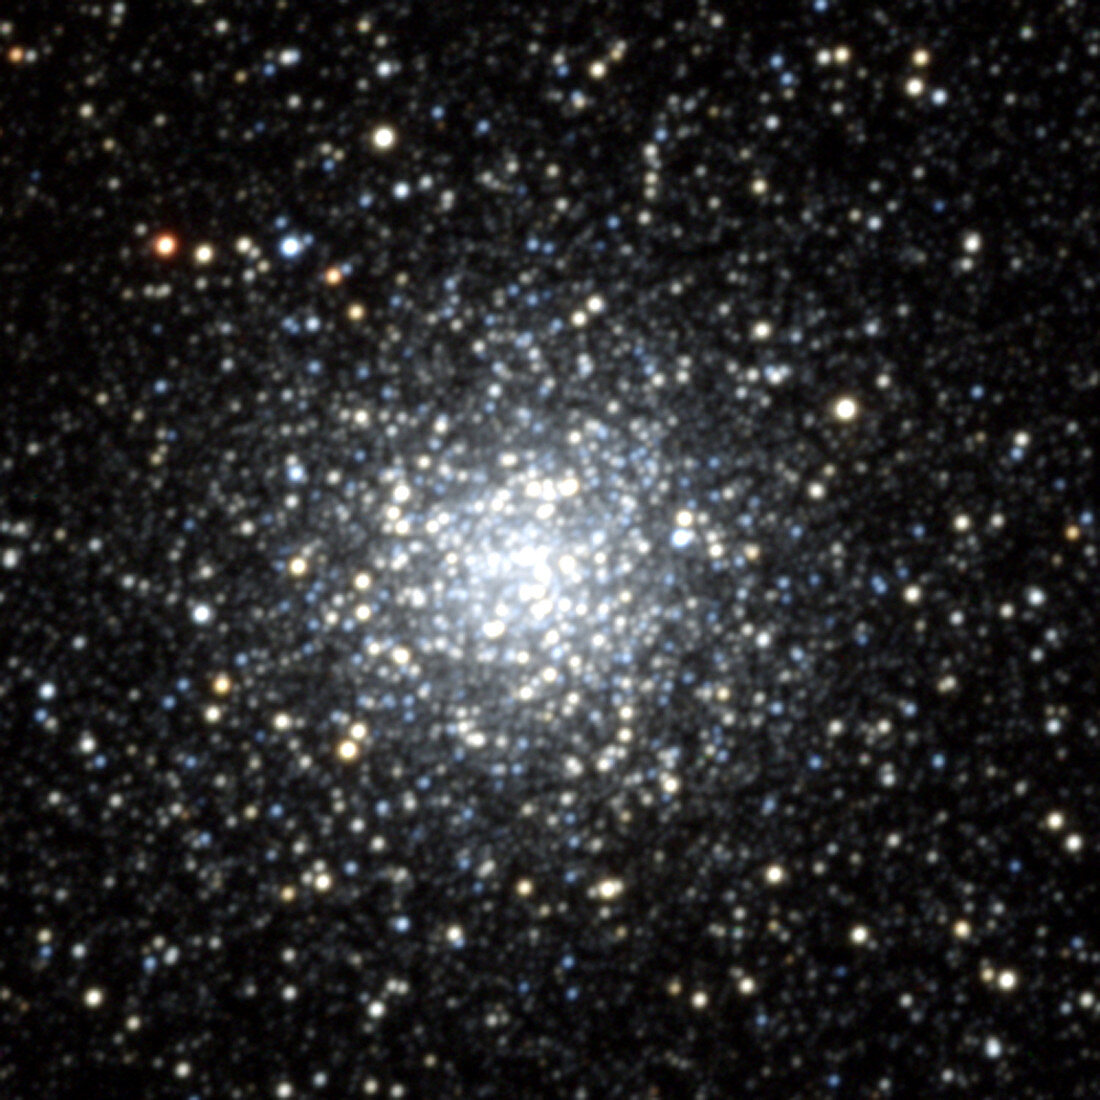 Globular cluster M9